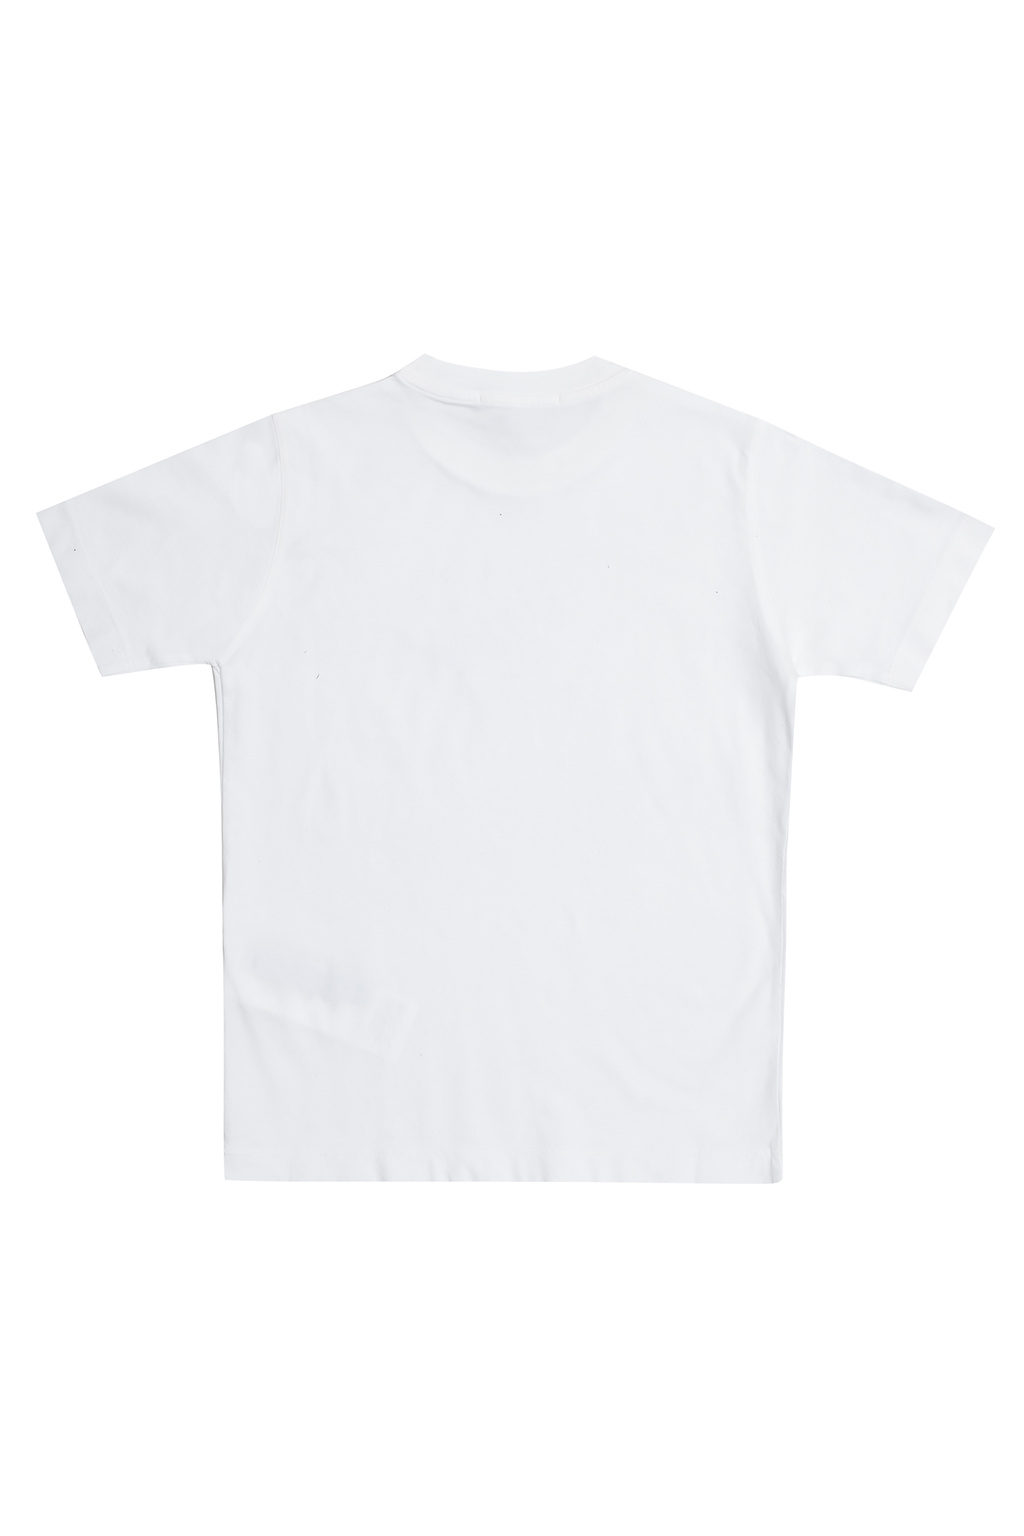 Cotton-rich Jurassic World™ hoodie Logo T-shirt